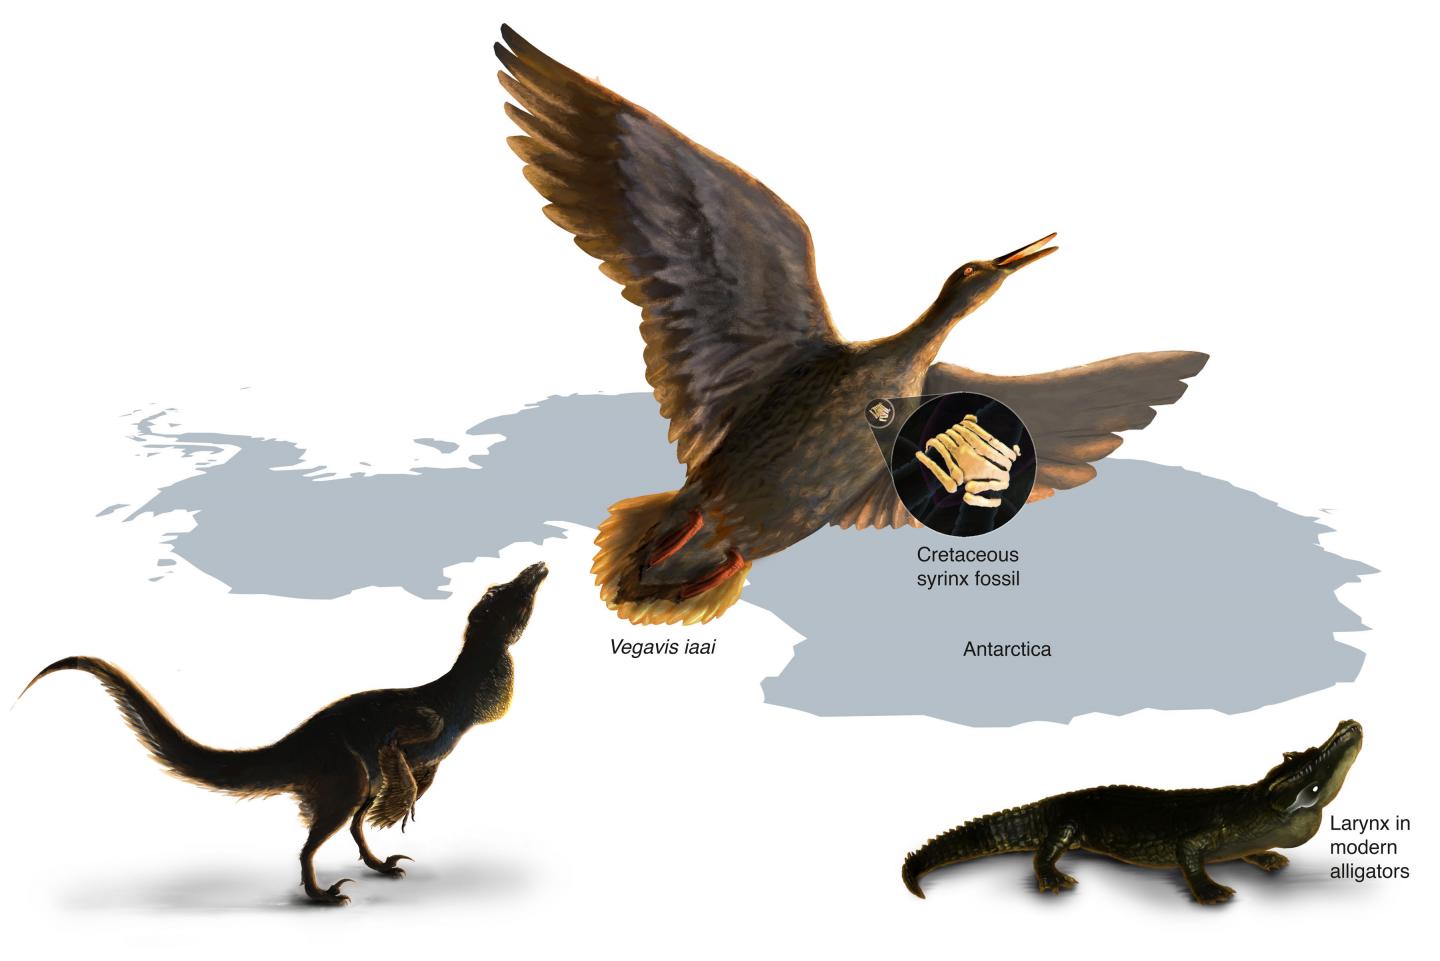 Oldest known squawk box suggests dinosaurs li | EurekAlert!